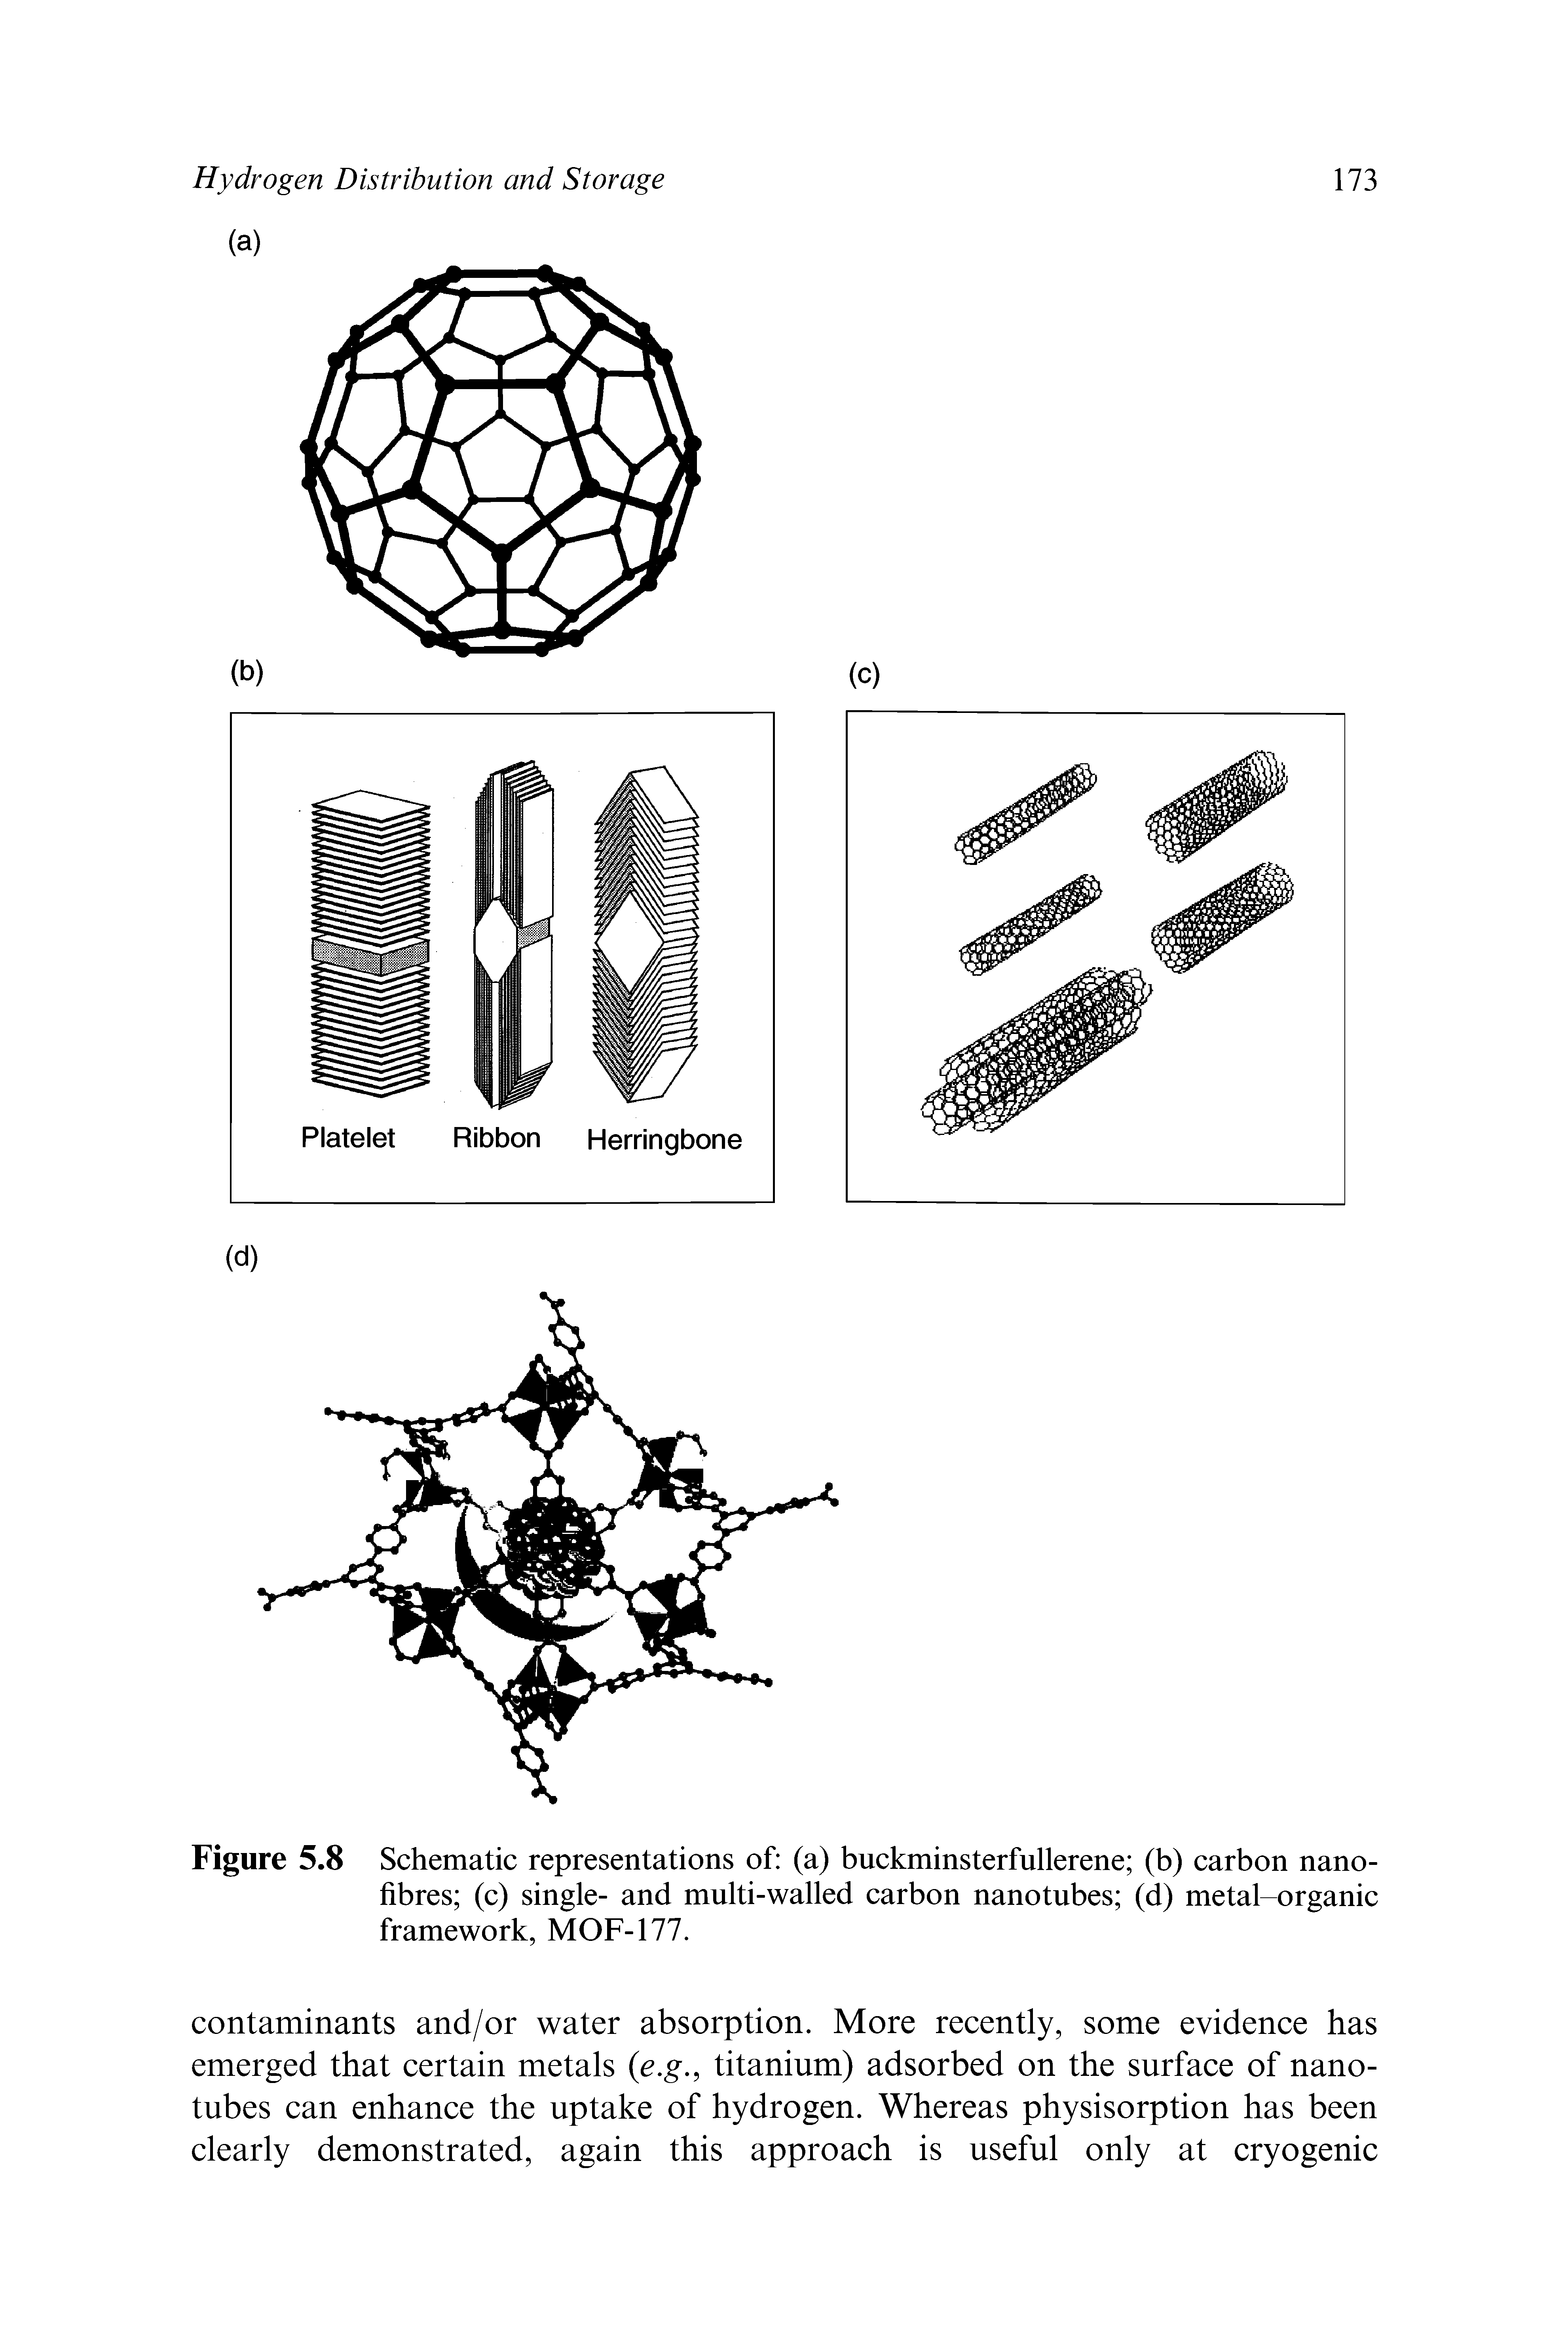 Figure 5.8 Schematic representations of (a) buckminsterfullerene (b) carbon nanofibres (c) single- and multi-walled carbon nanotubes (d) metal-organic framework, MOF-177.